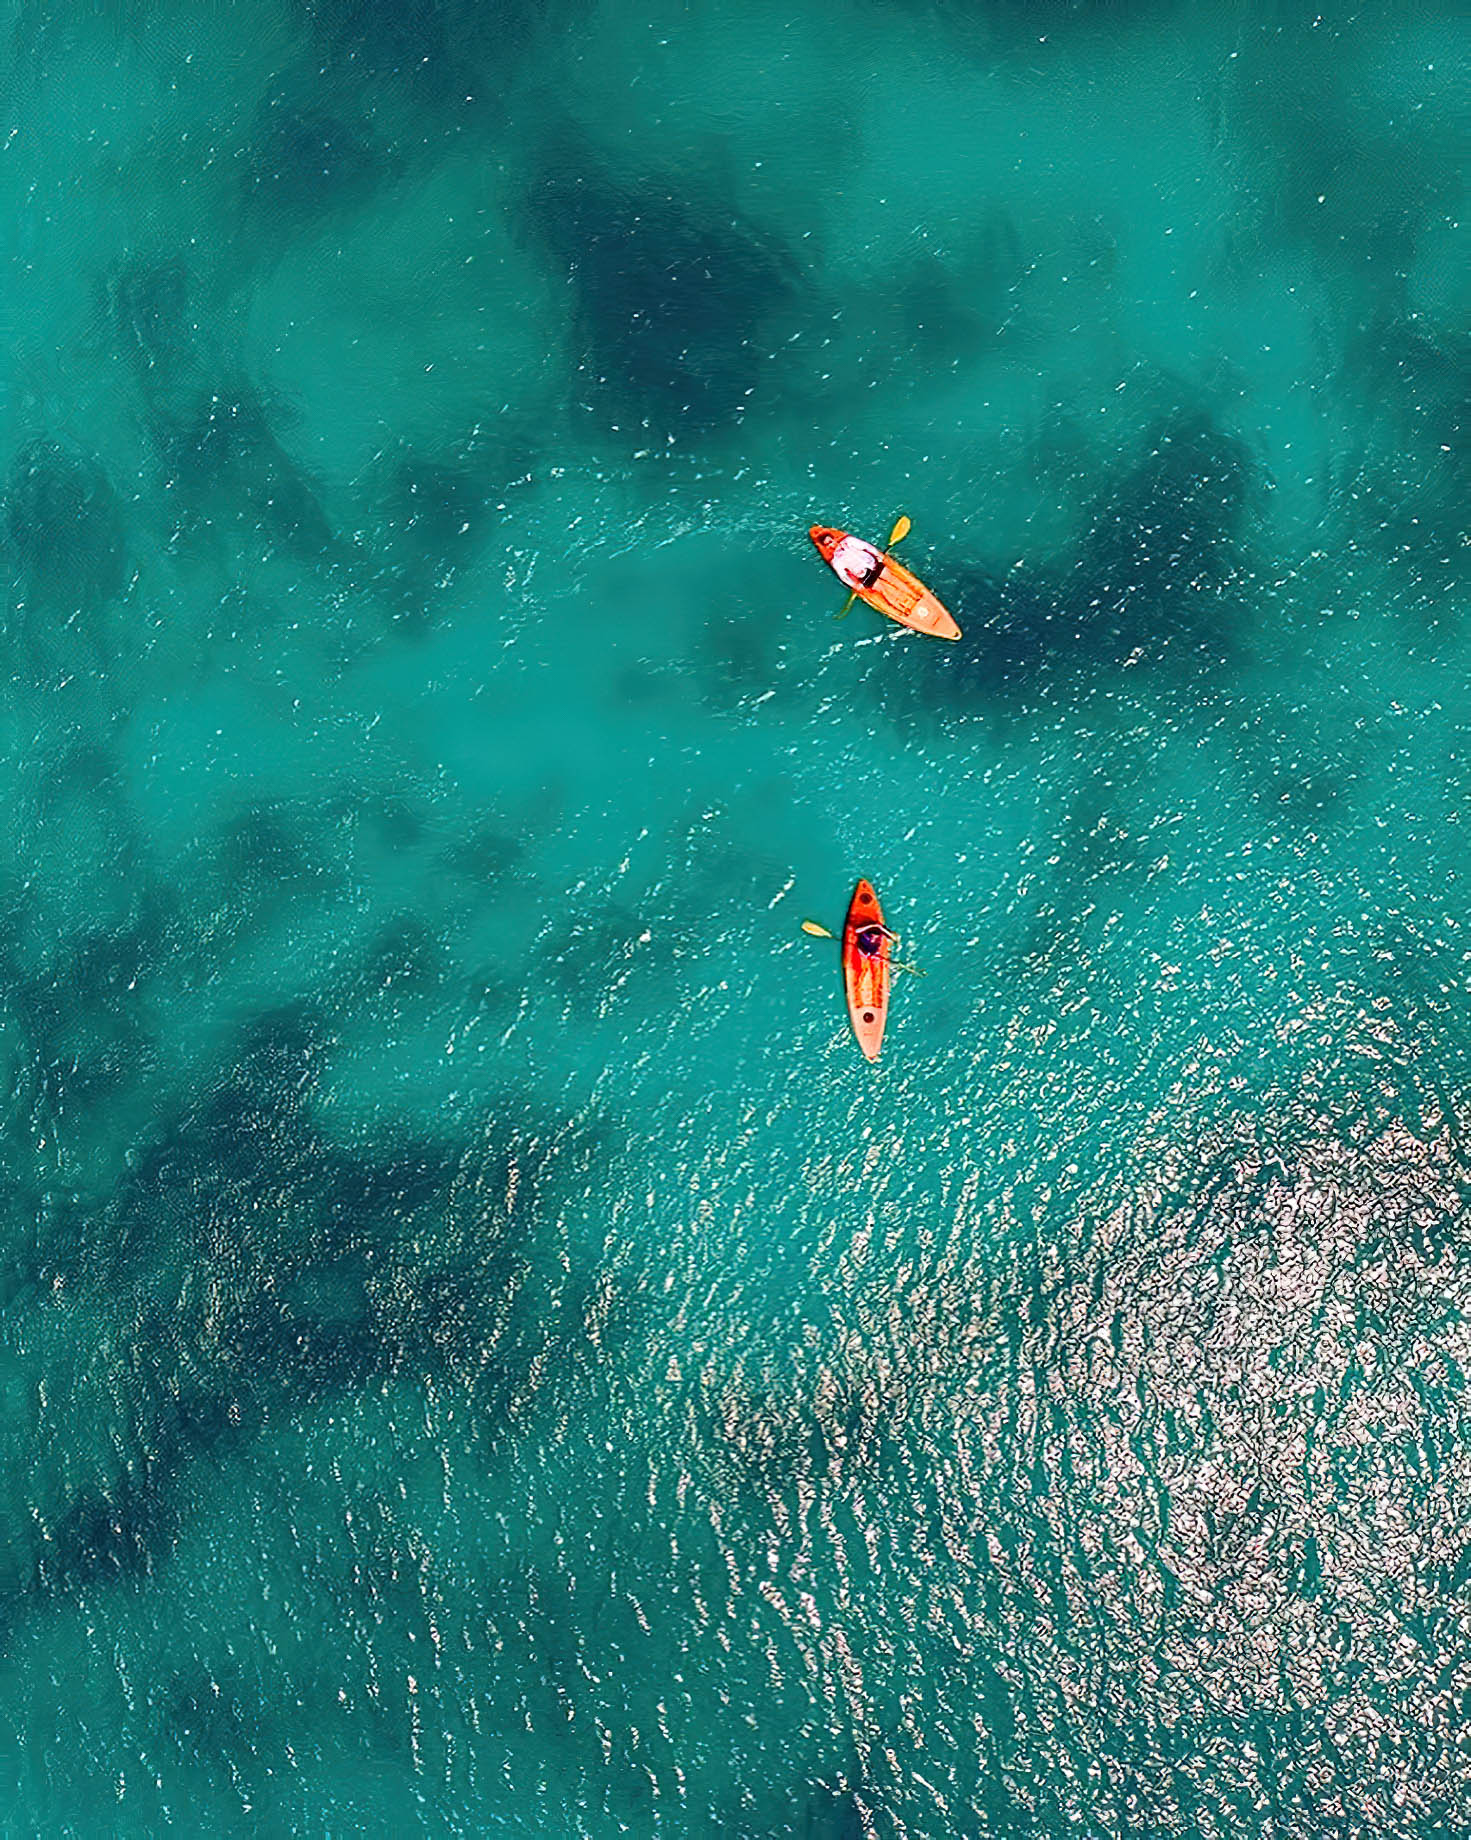 Amanyara Resort - Providenciales, Turks and Caicos Islands - Ocean Kayaking